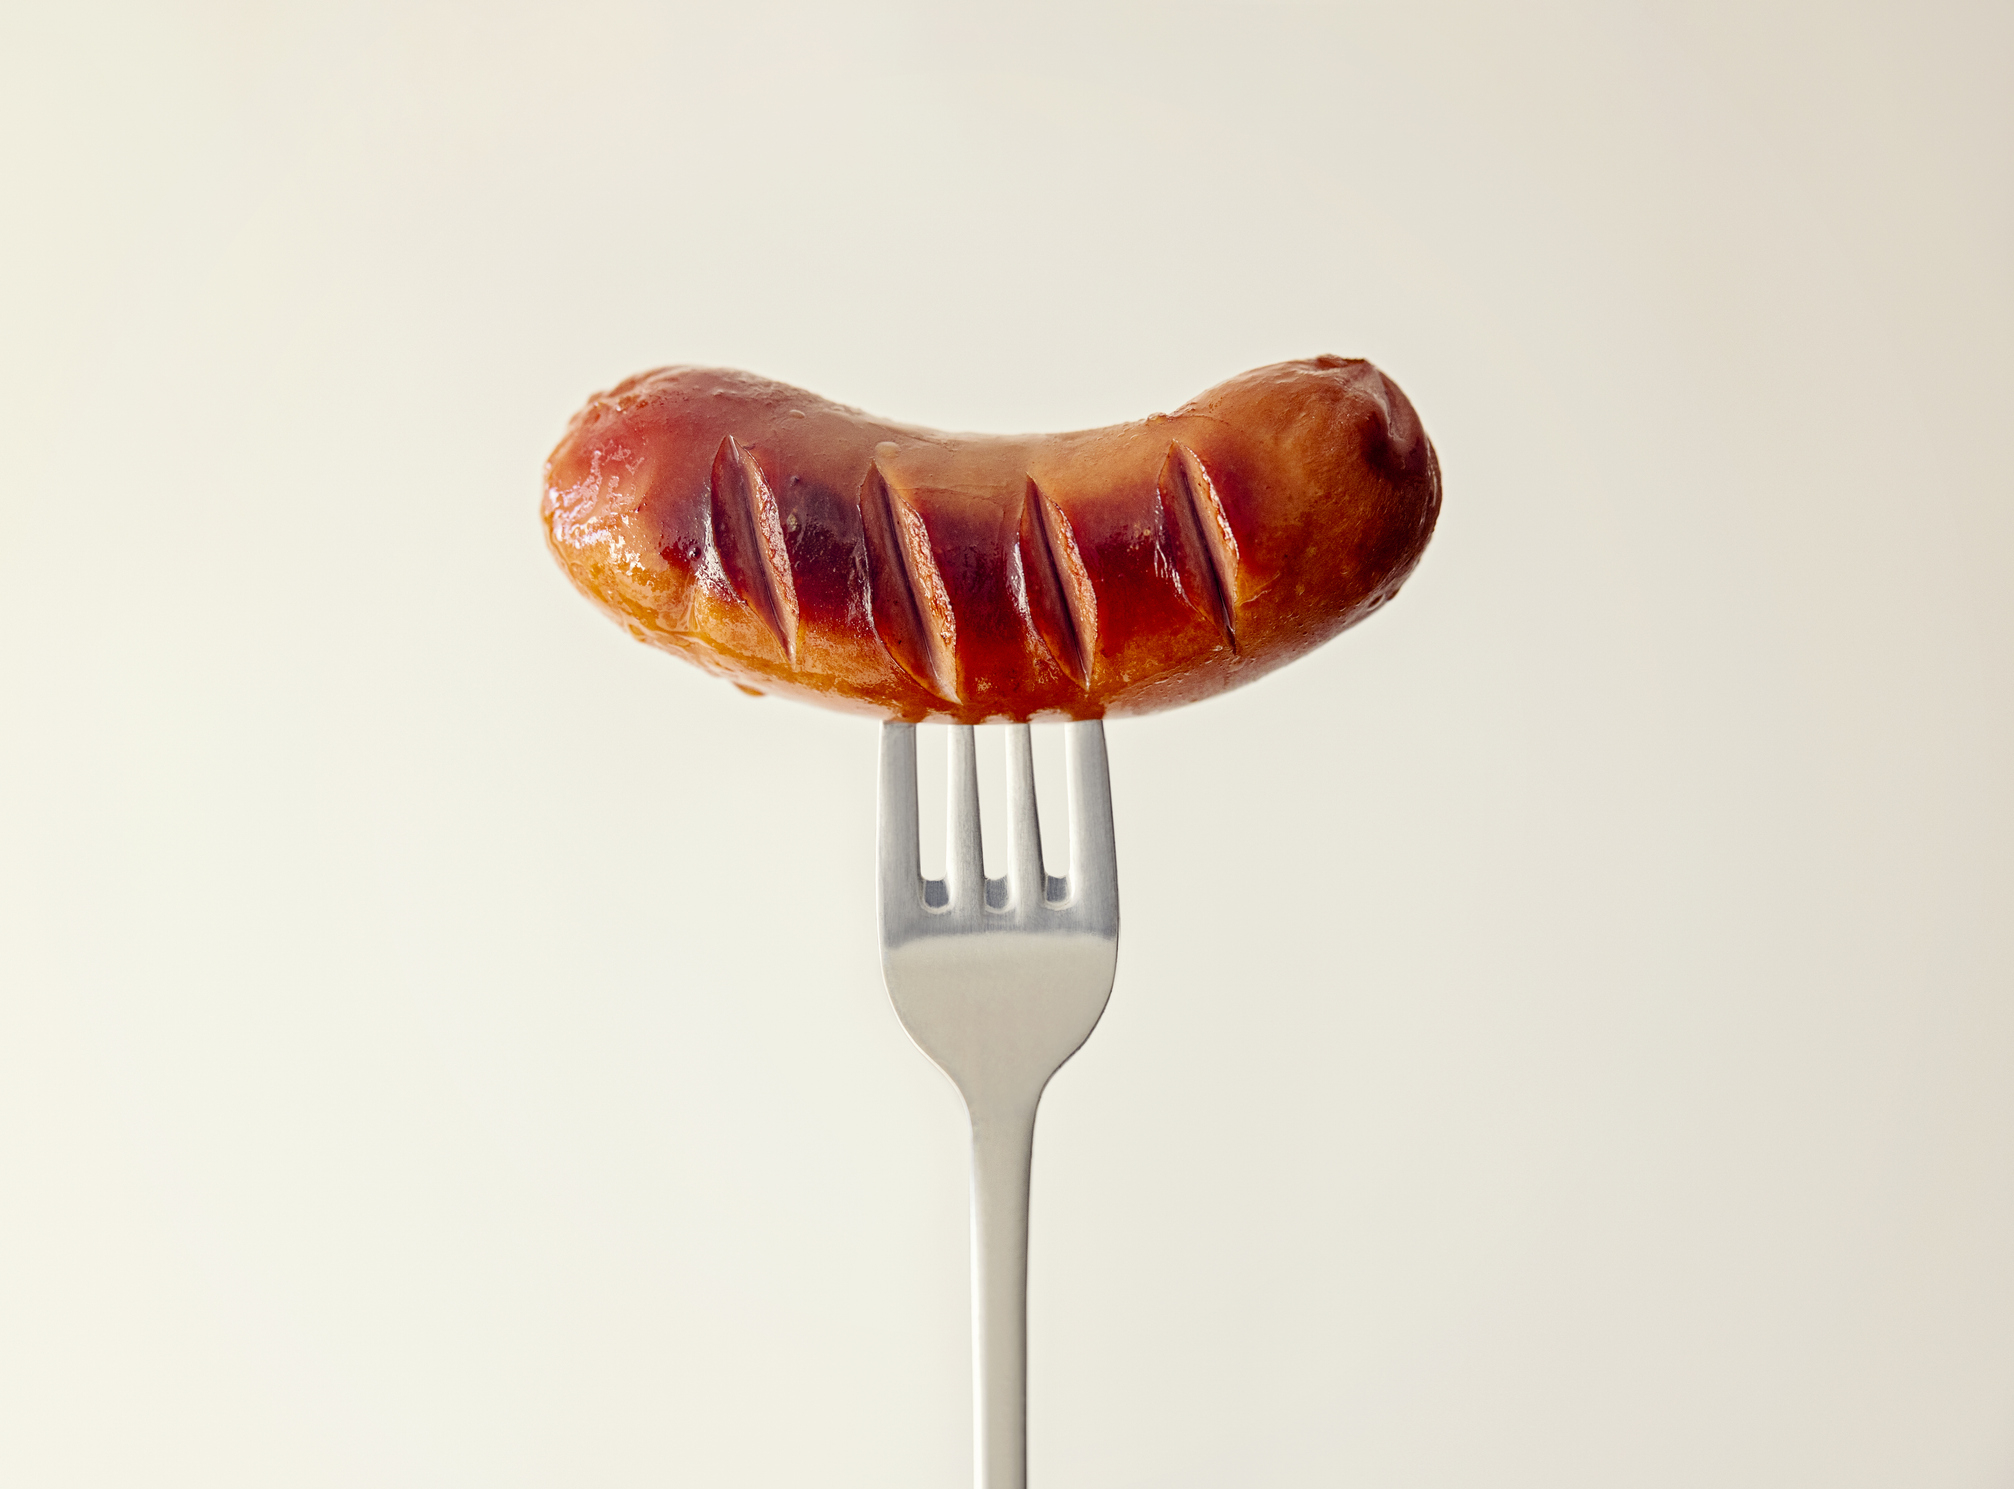 Grilled sausage skewered on a fork against a plain background